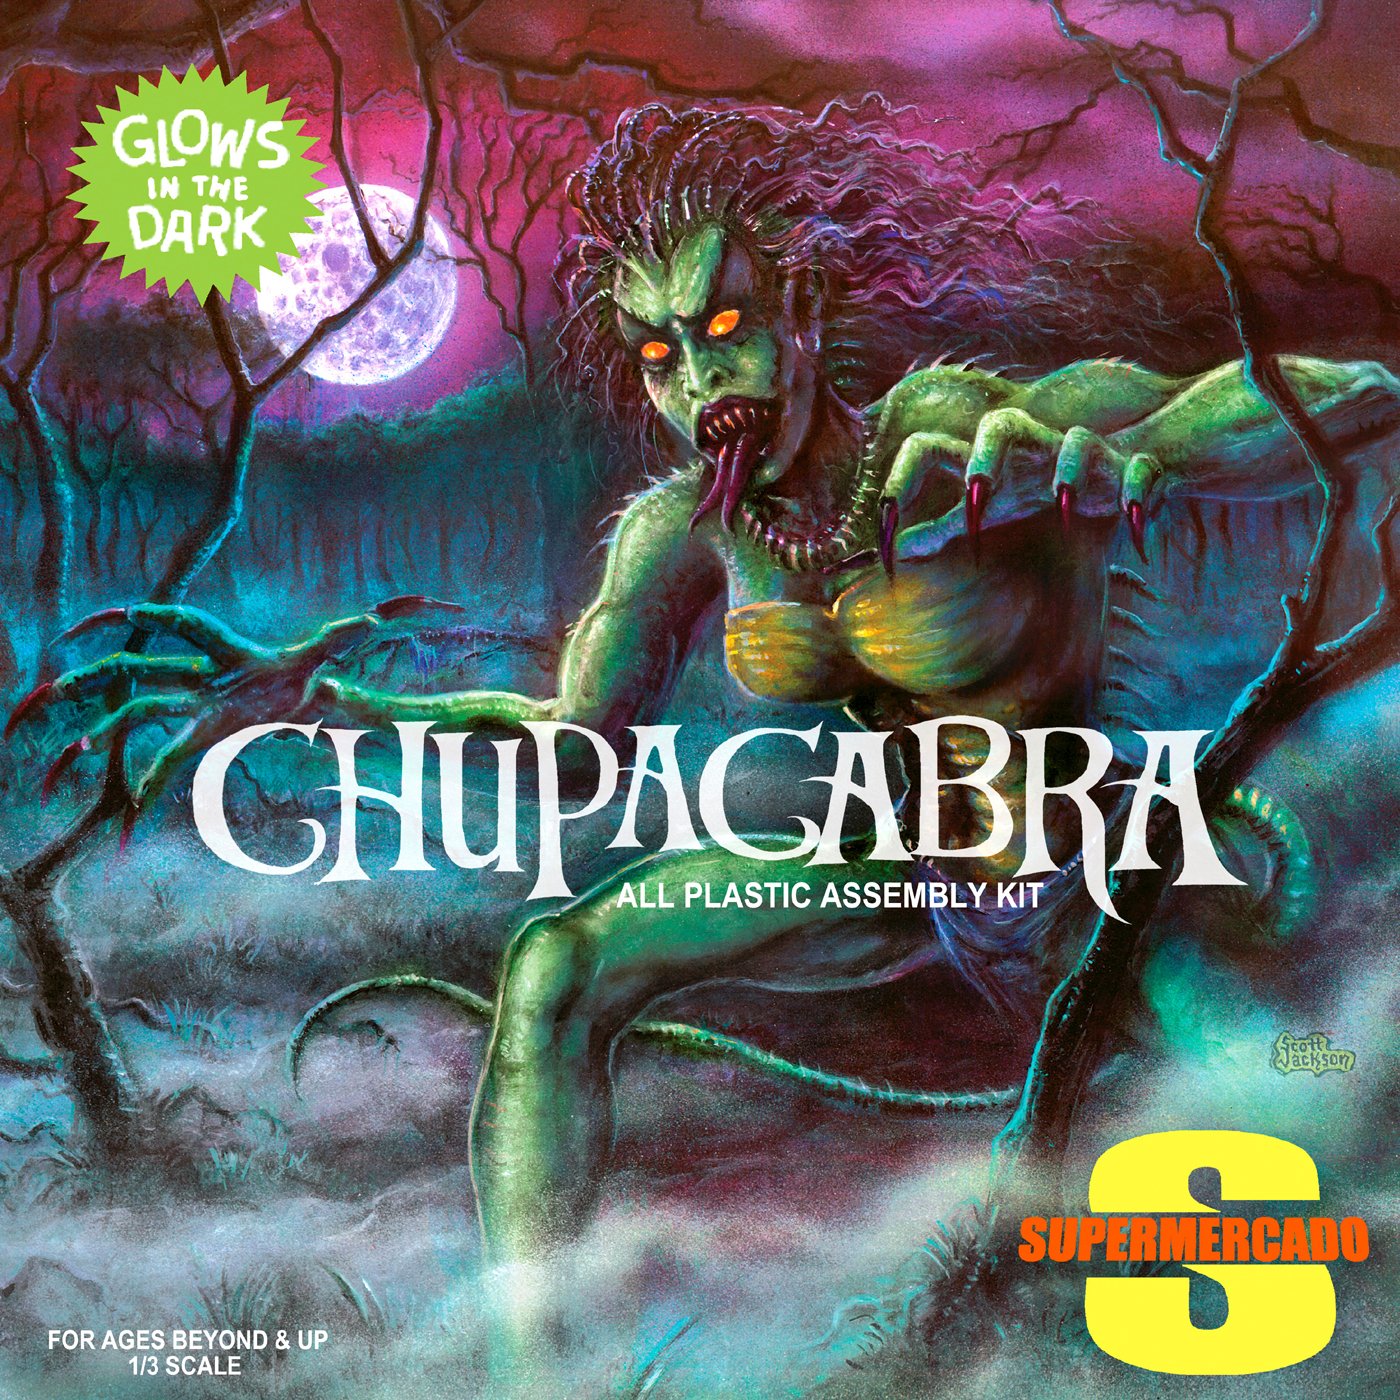 Chupacabra by Supermercado USB Wristband